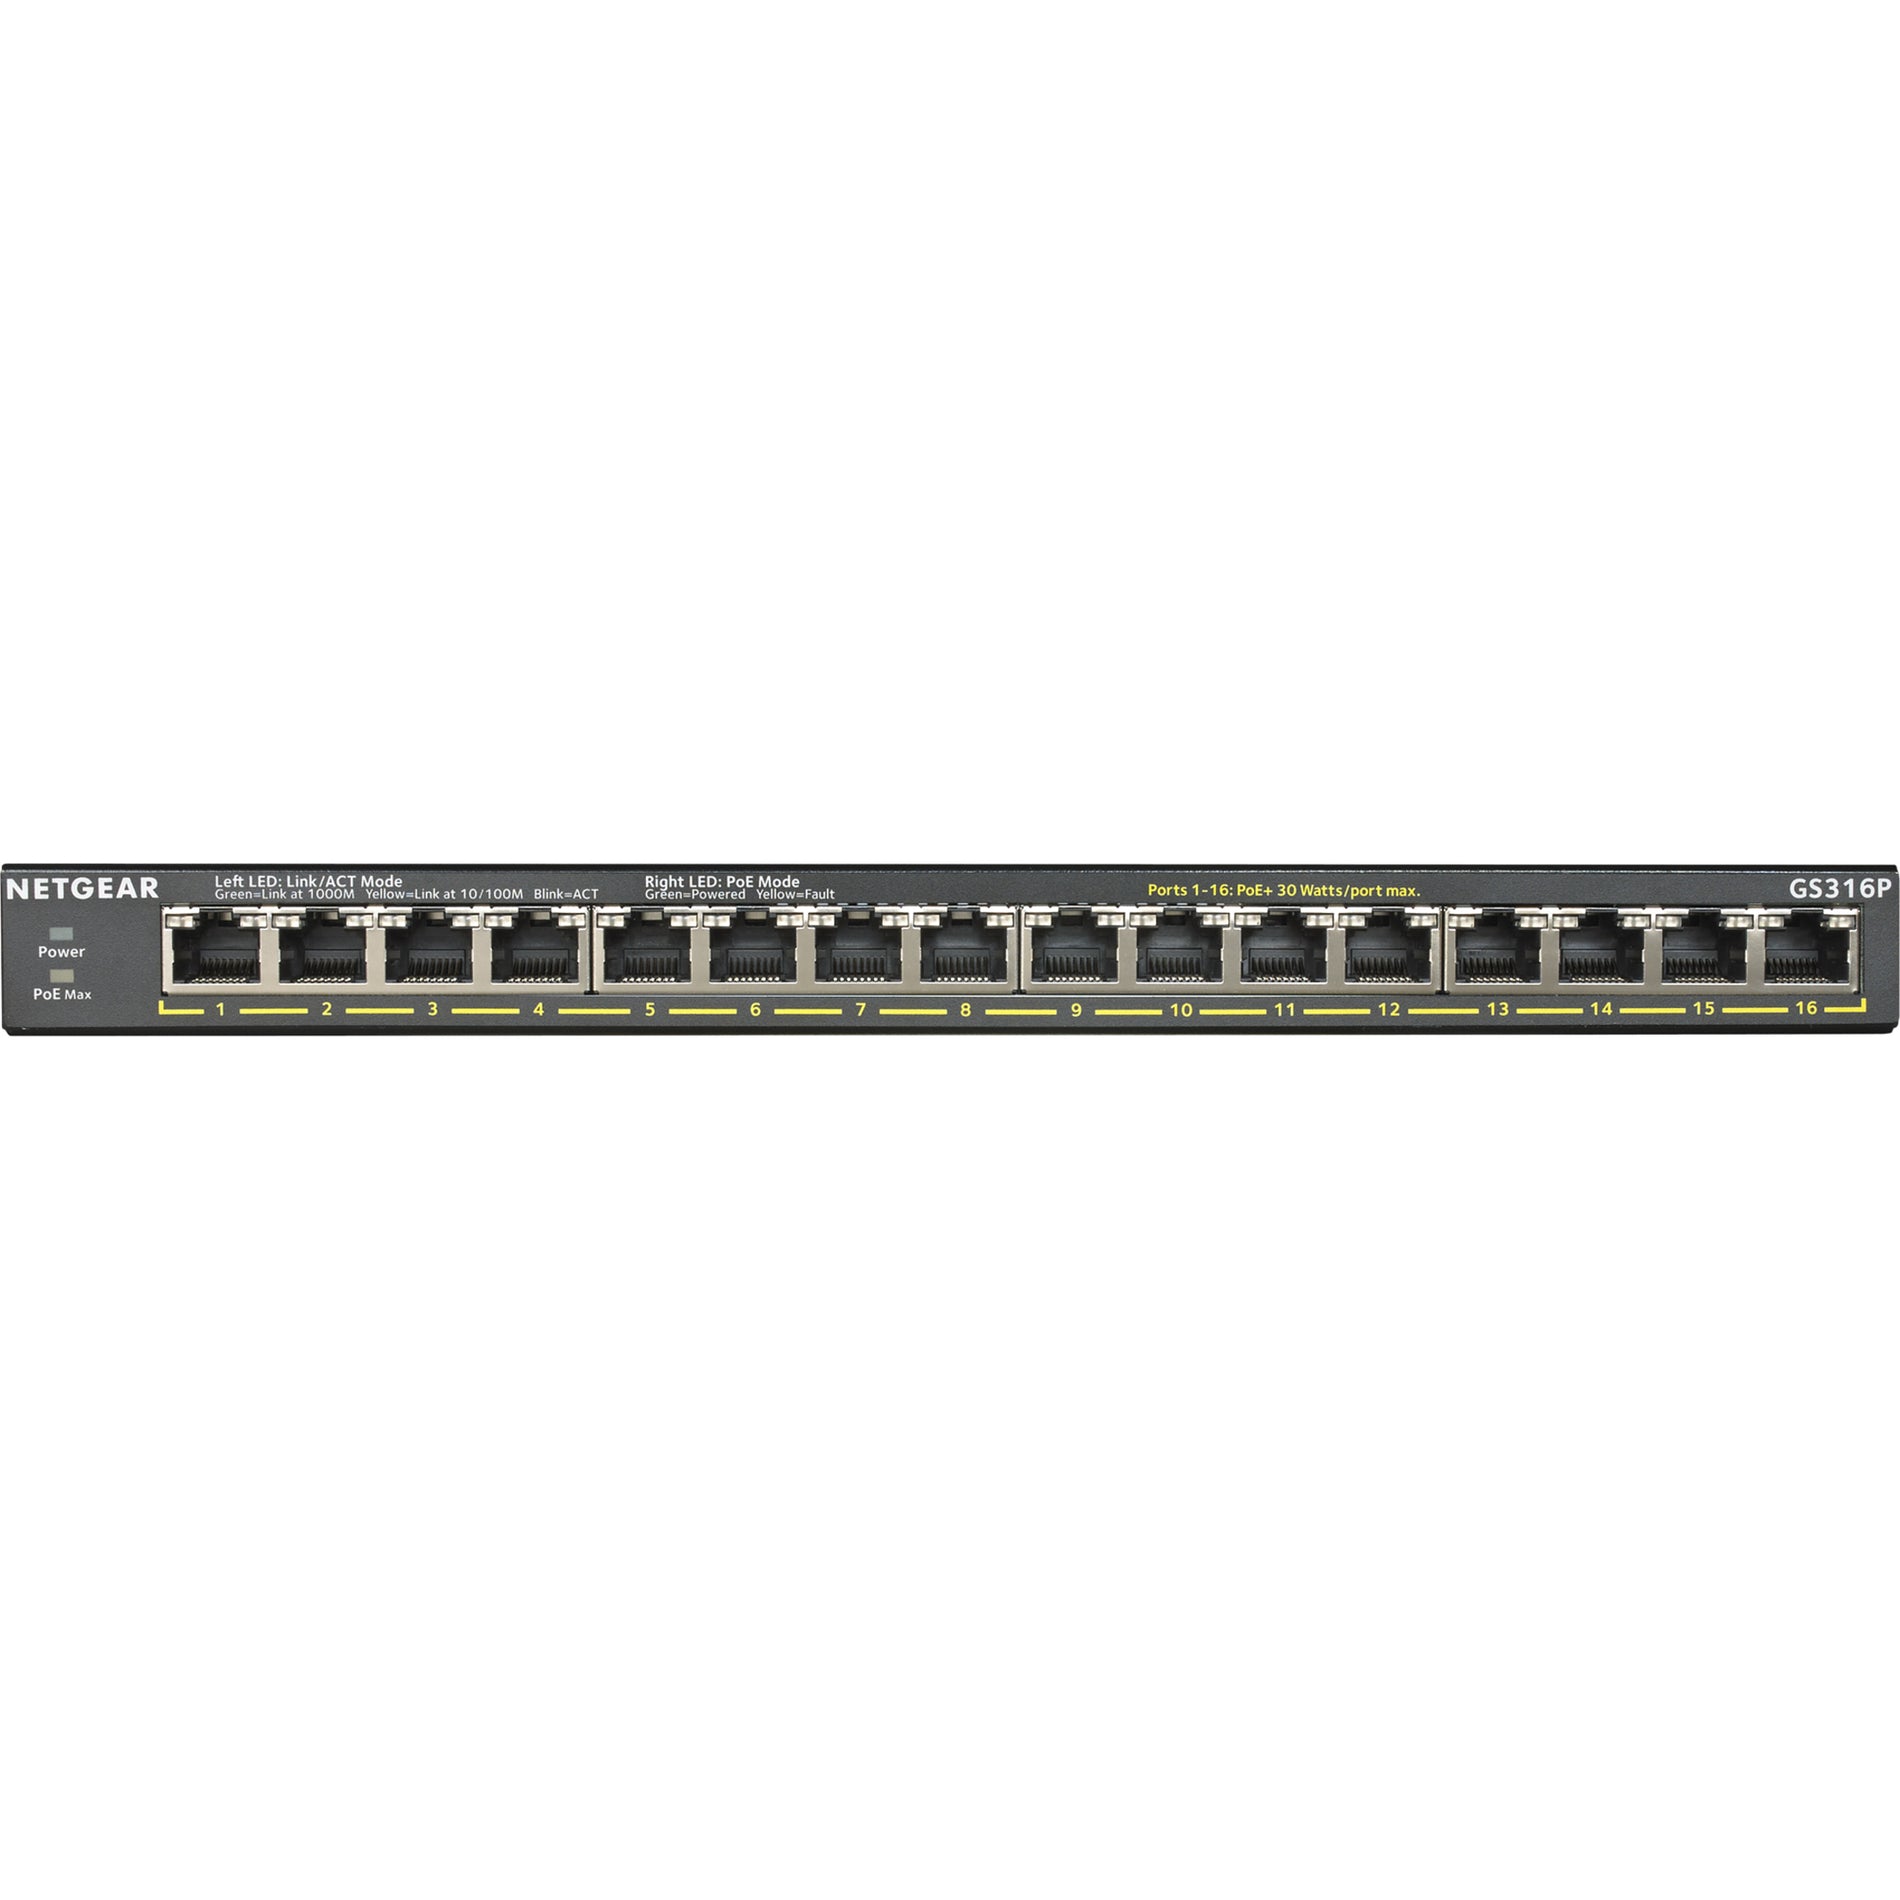 Netgear GS316P-100NAS GS316P Ethernet Switch, 16 Port Gigabit Ethernet PoE+, 3 Year Lifetime Warranty